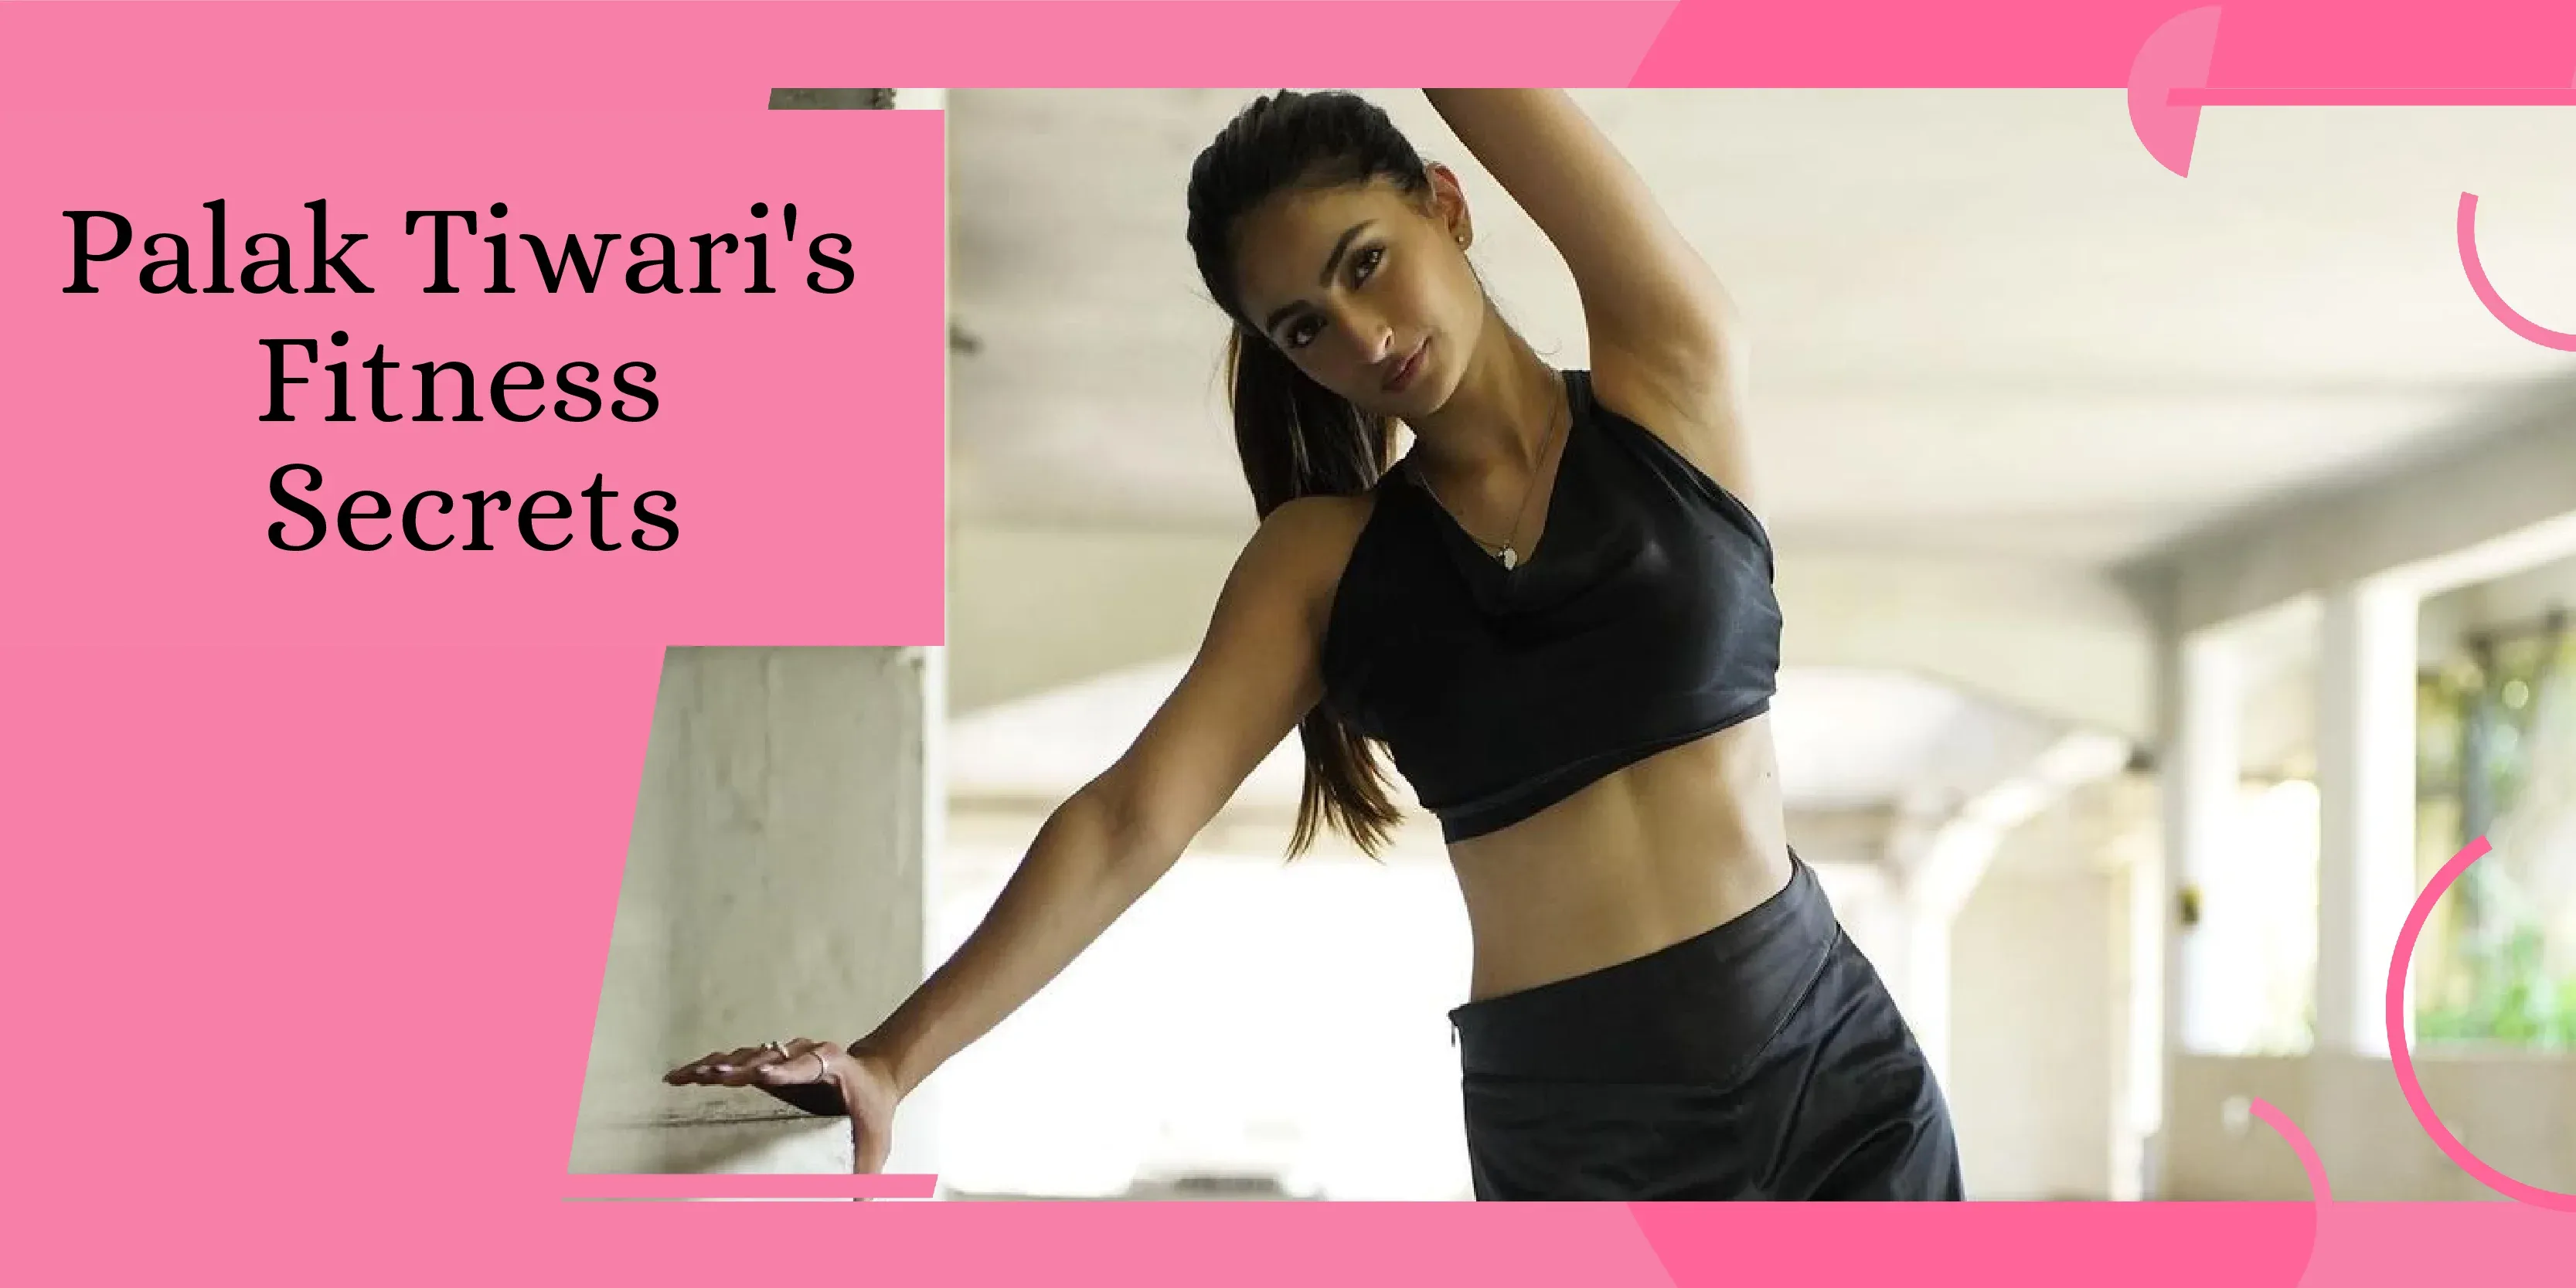 Palak Tiwari's Diet and Fitness Secrets